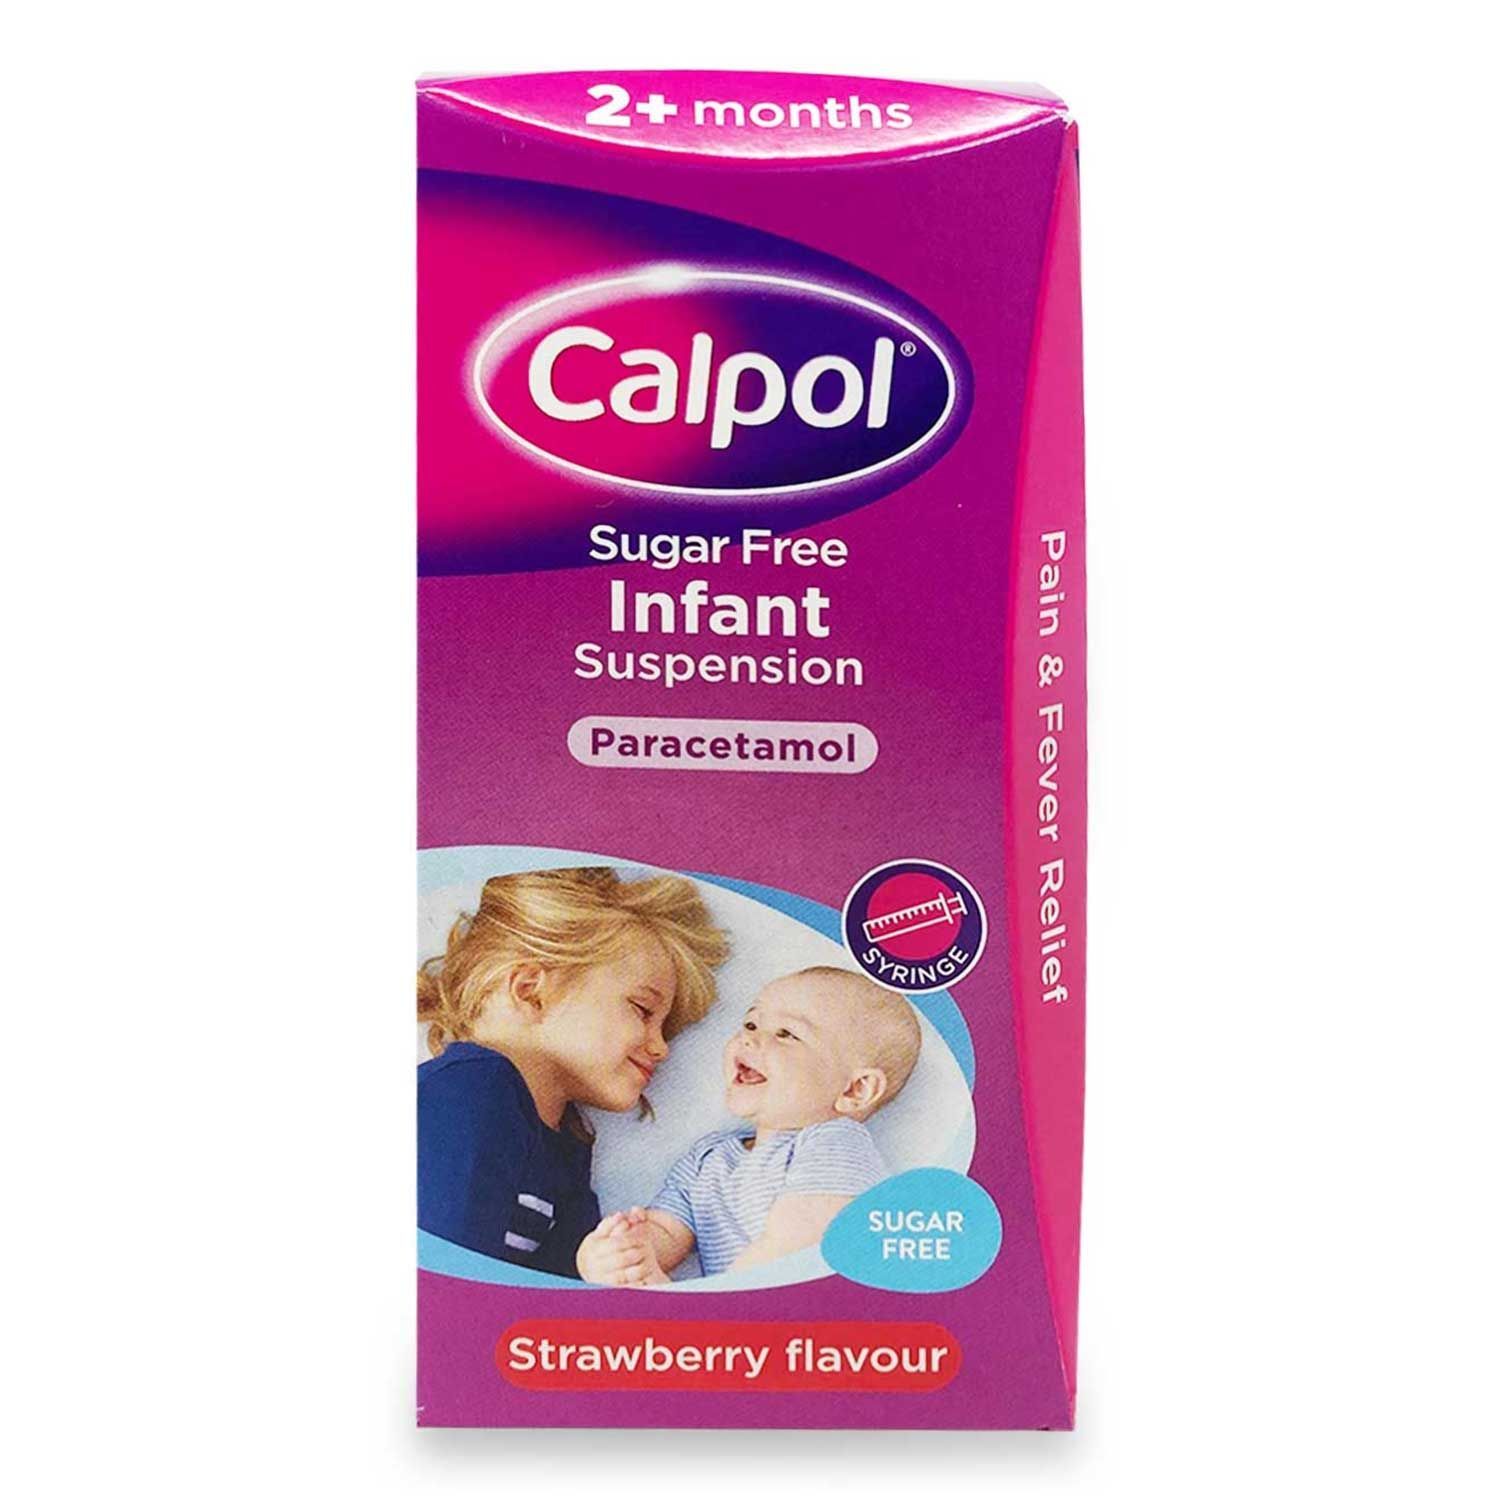 Calpol infant